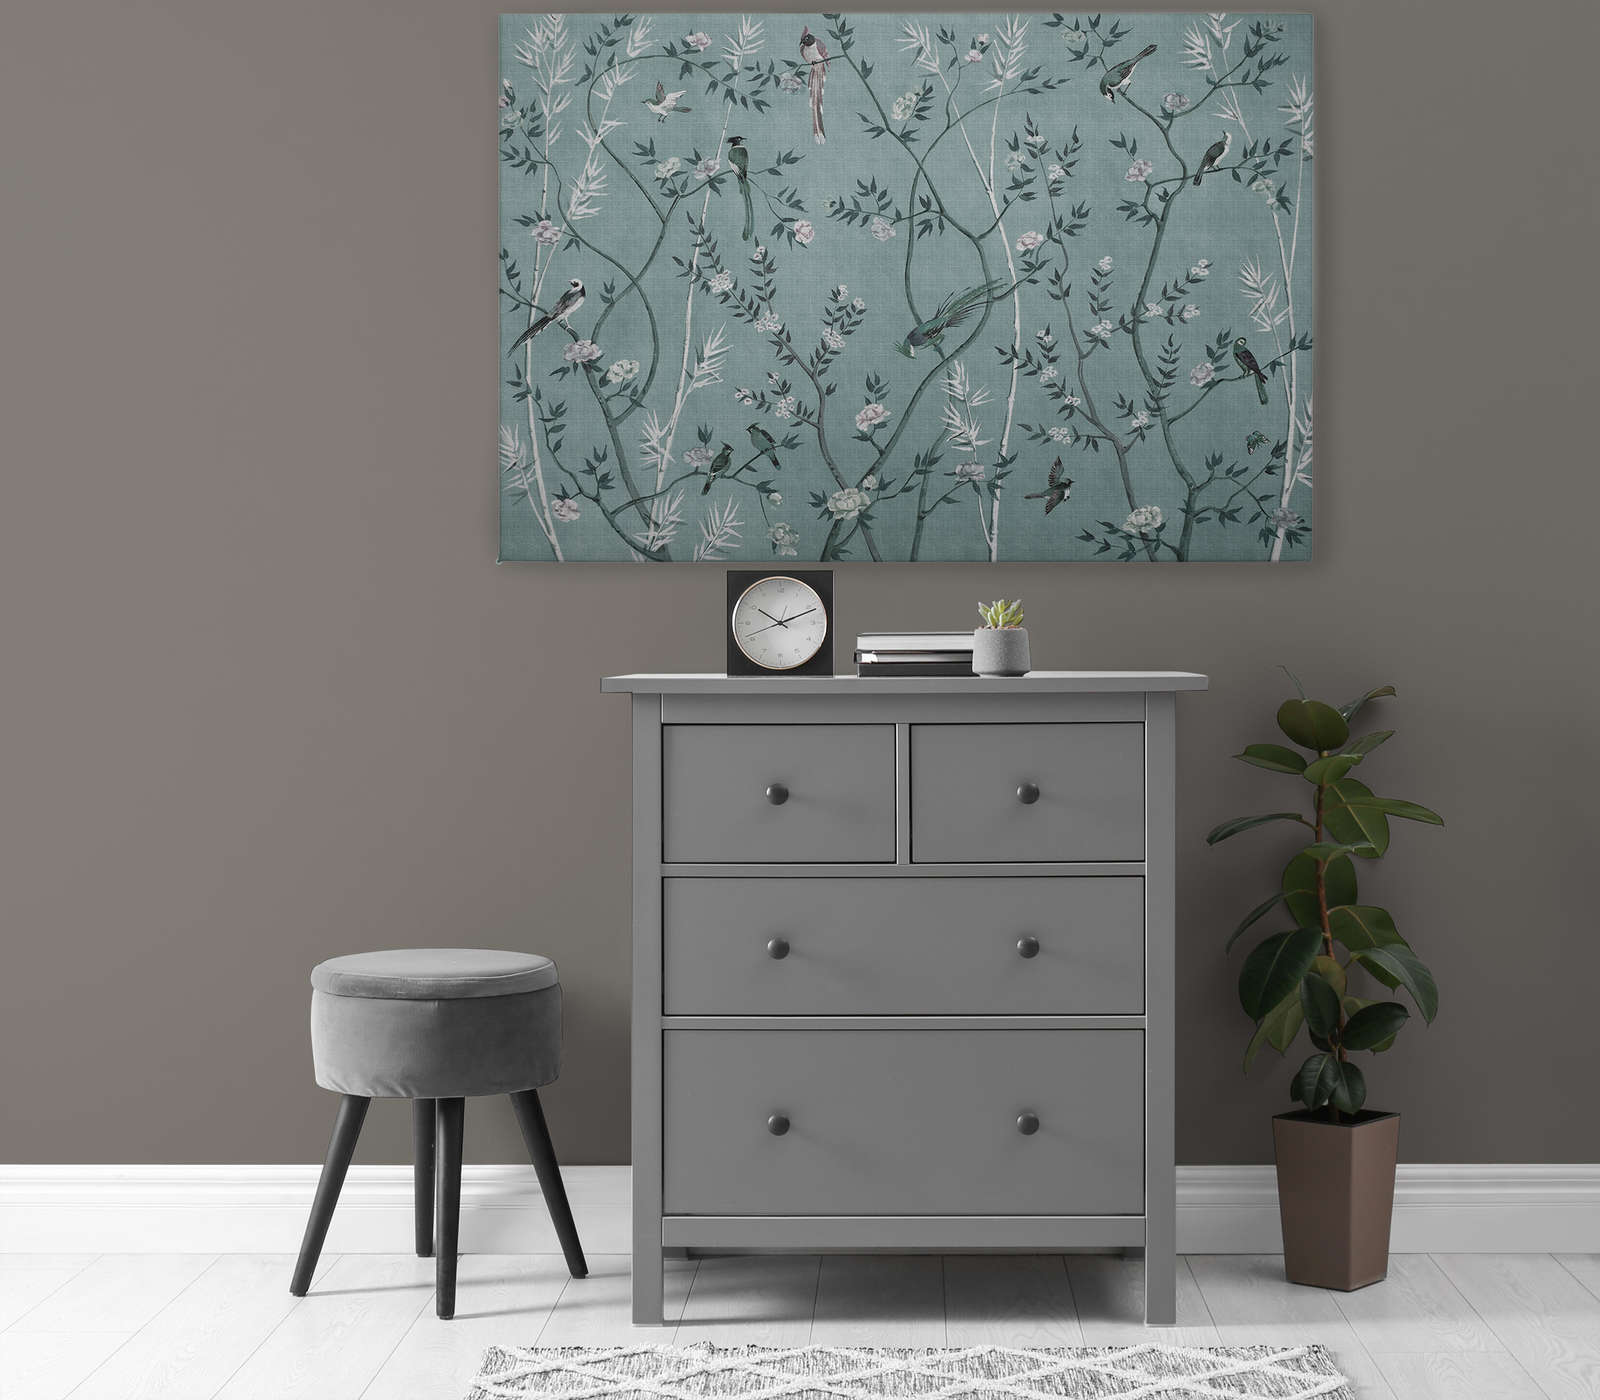             Tea Room 1 - Canvas schilderij Birds & Blossoms Design in Petrol & White - 1.20 m x 0.80 m
        